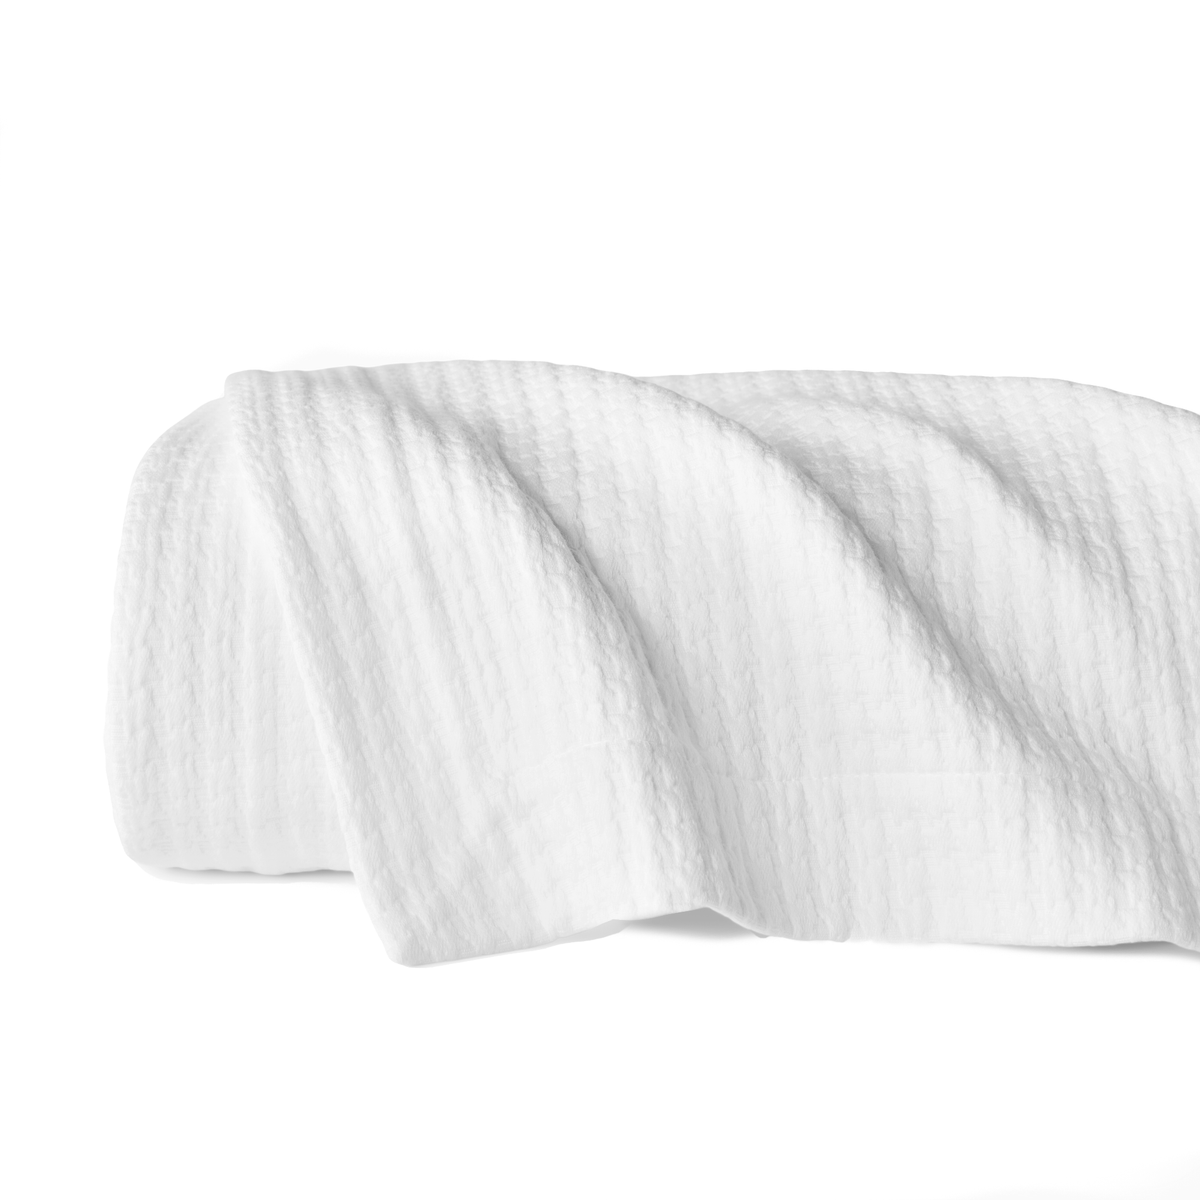 Folded Sferra Hatteras Coverlet in White Color